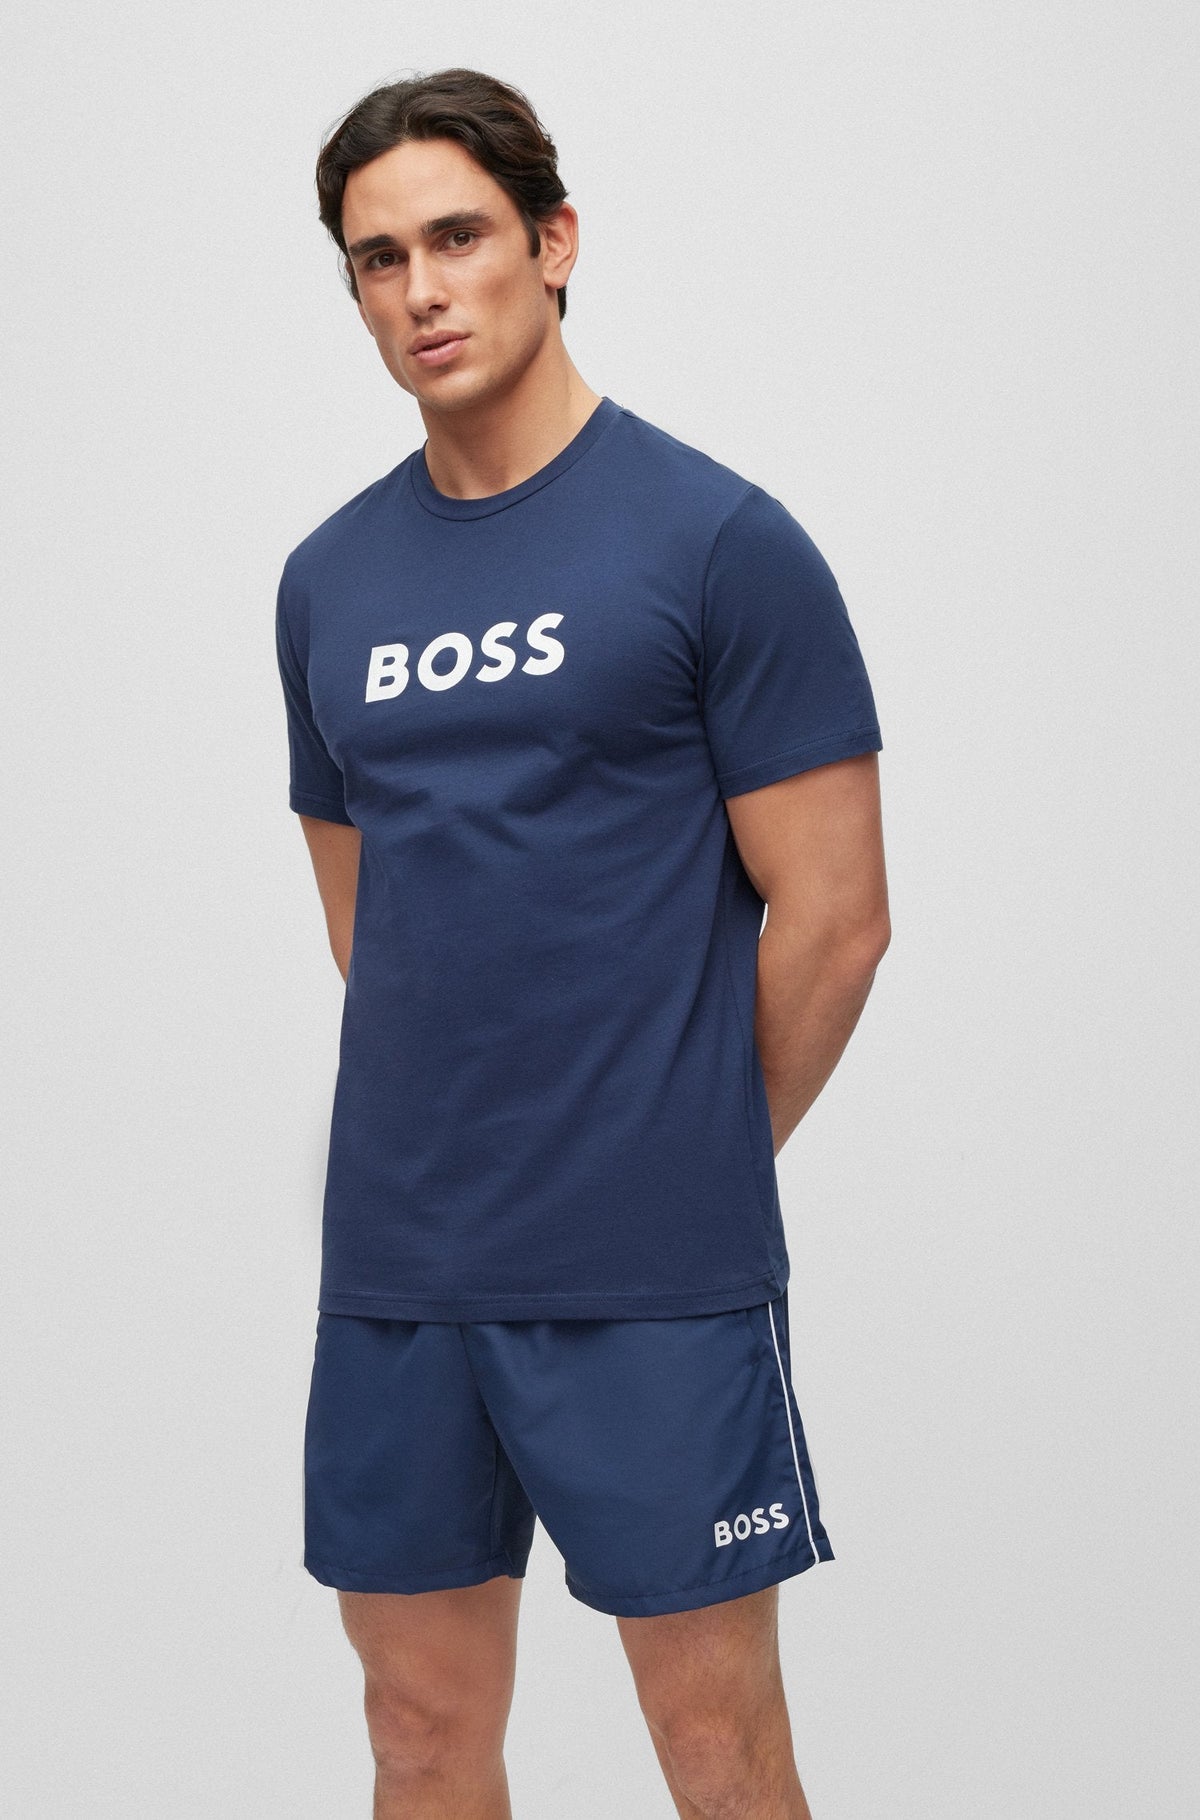 Camiseta Boss Regular Dark Blue